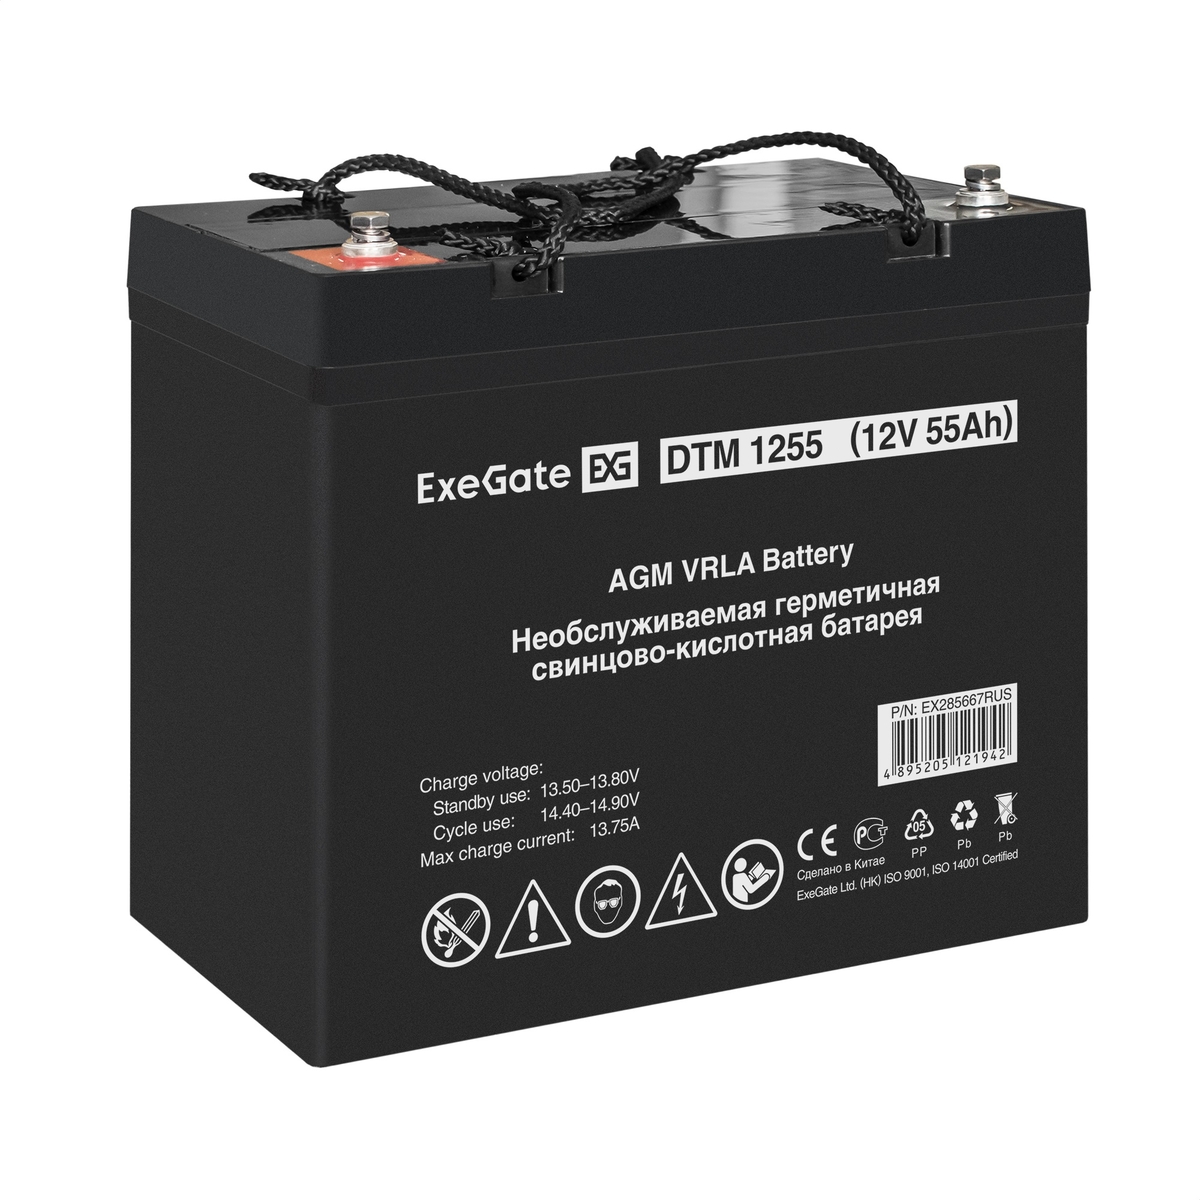 UPS set EX296005 + battery 55Ah EX285667 4 piece